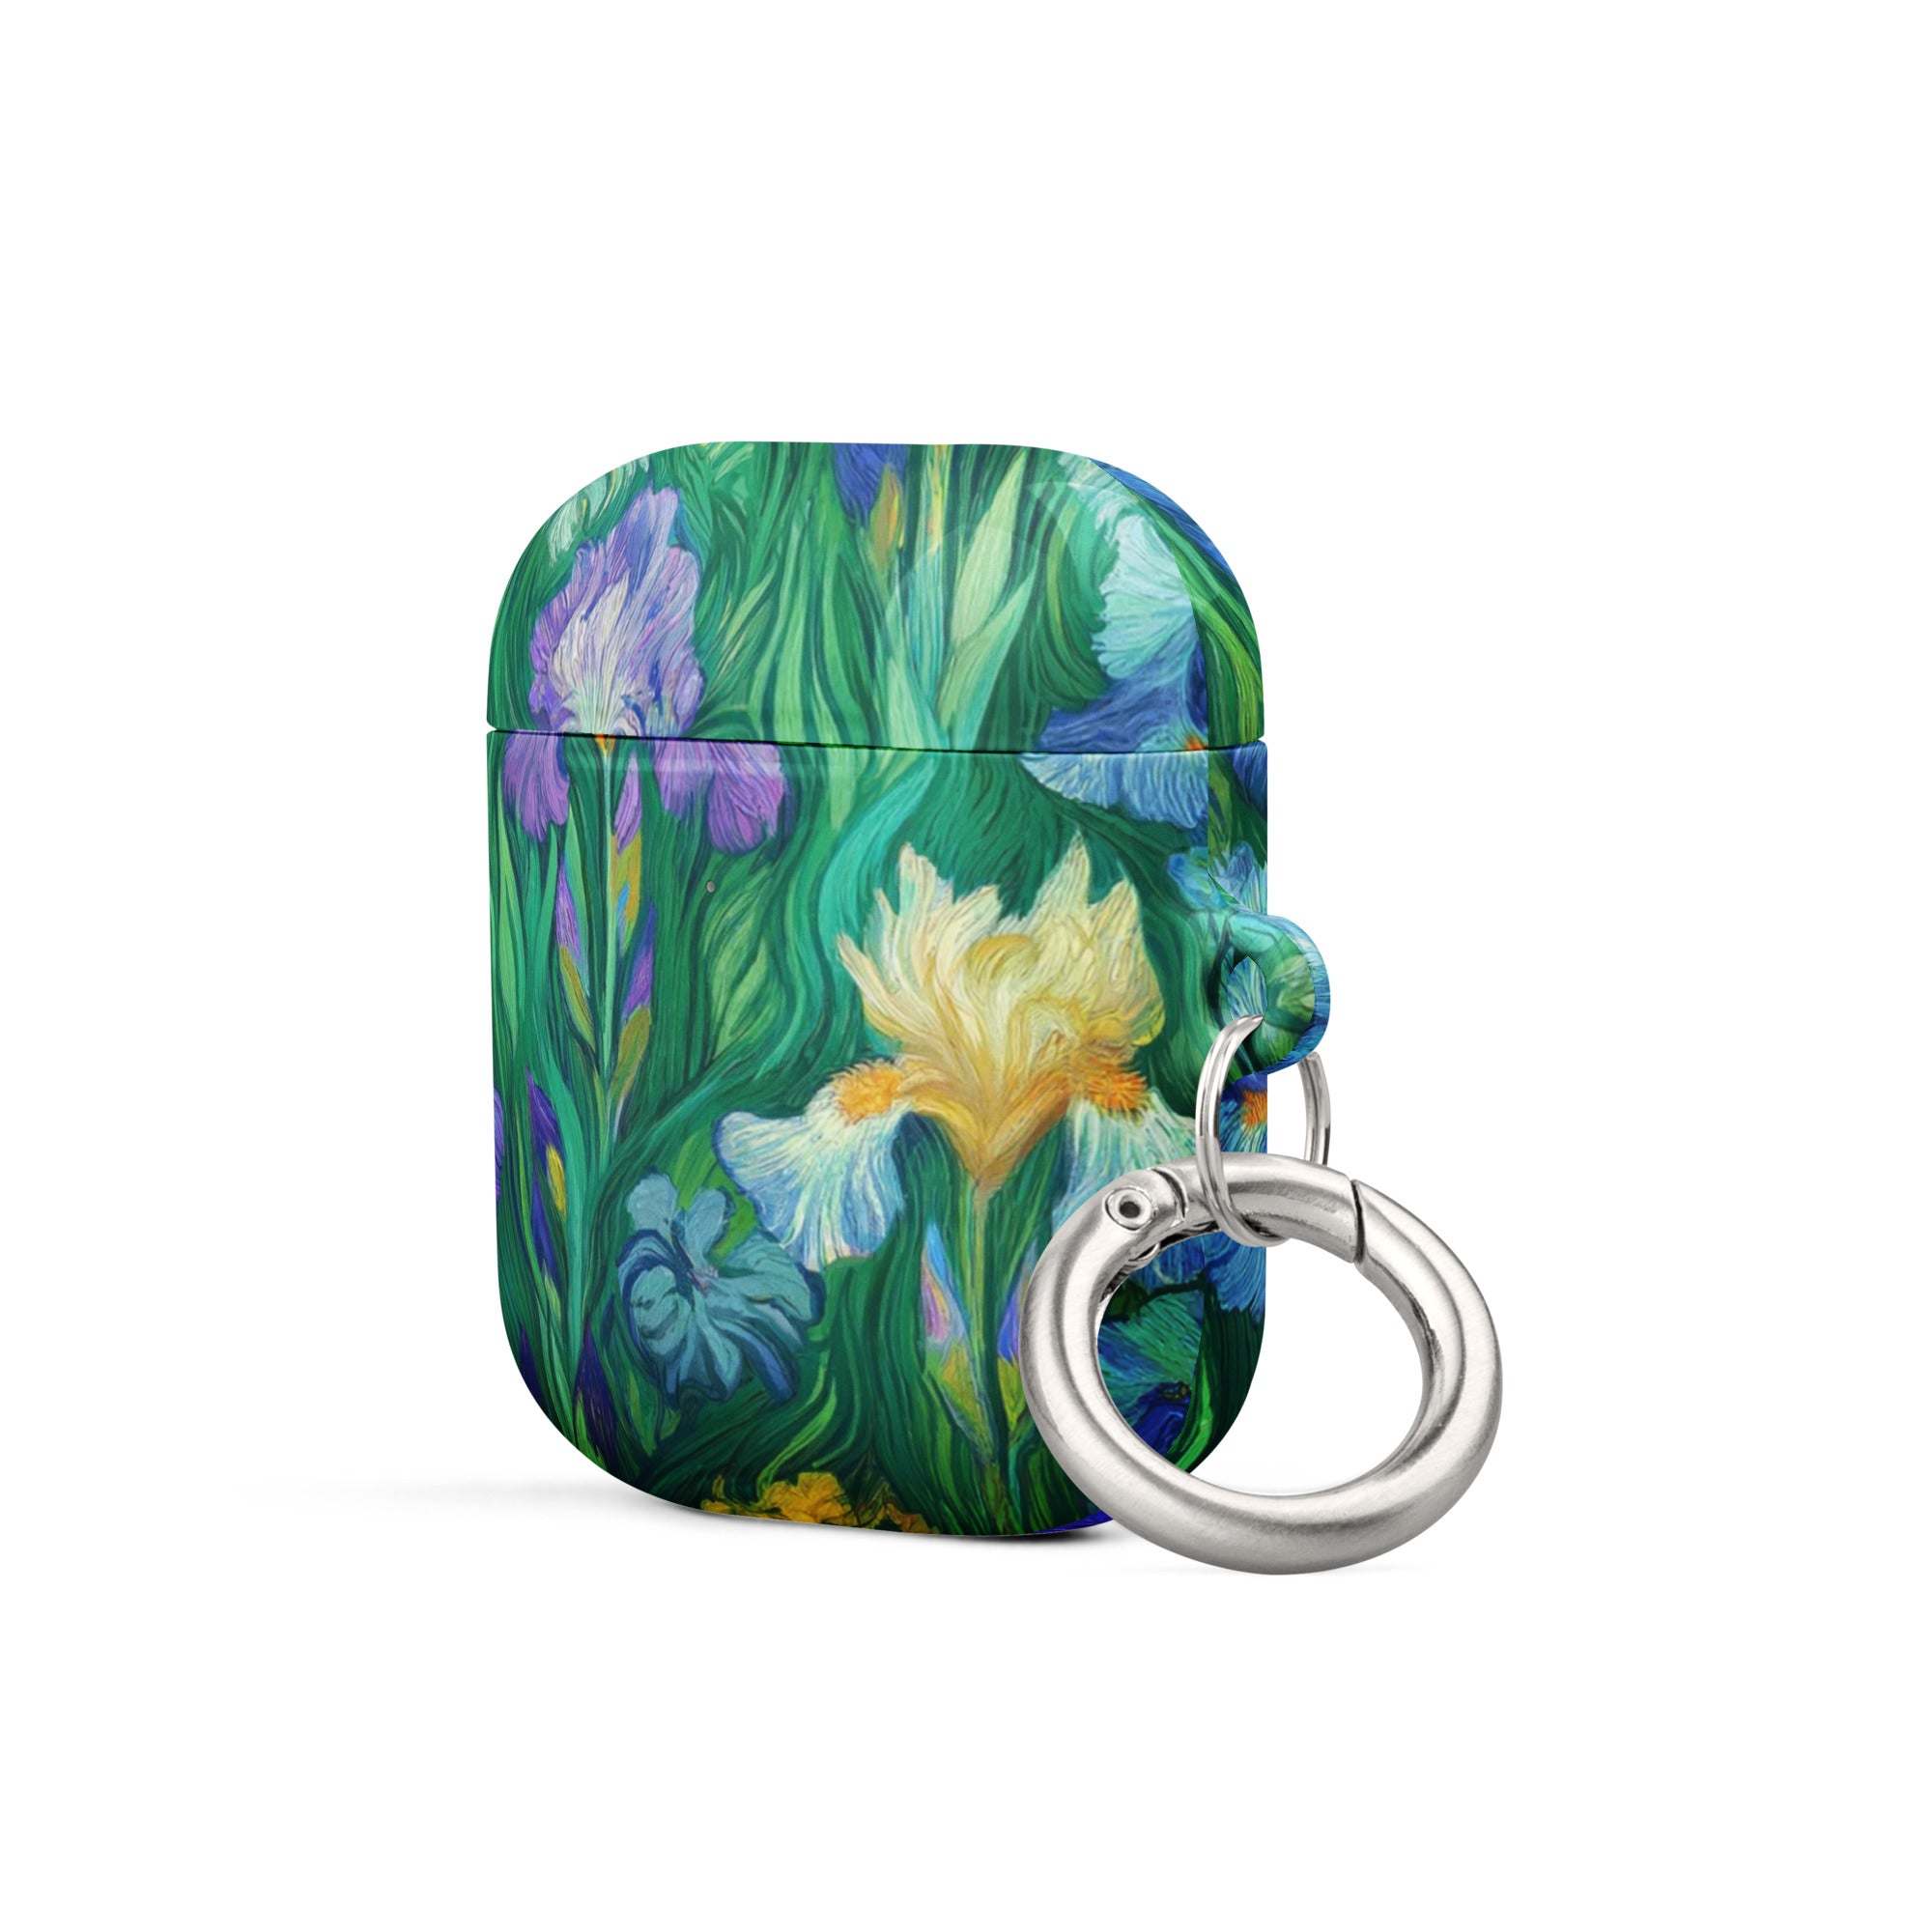 Vincent van Gogh „Iris“ – berühmtes Gemälde – AirPods®-Hülle | Premium-Kunsthülle für AirPods®